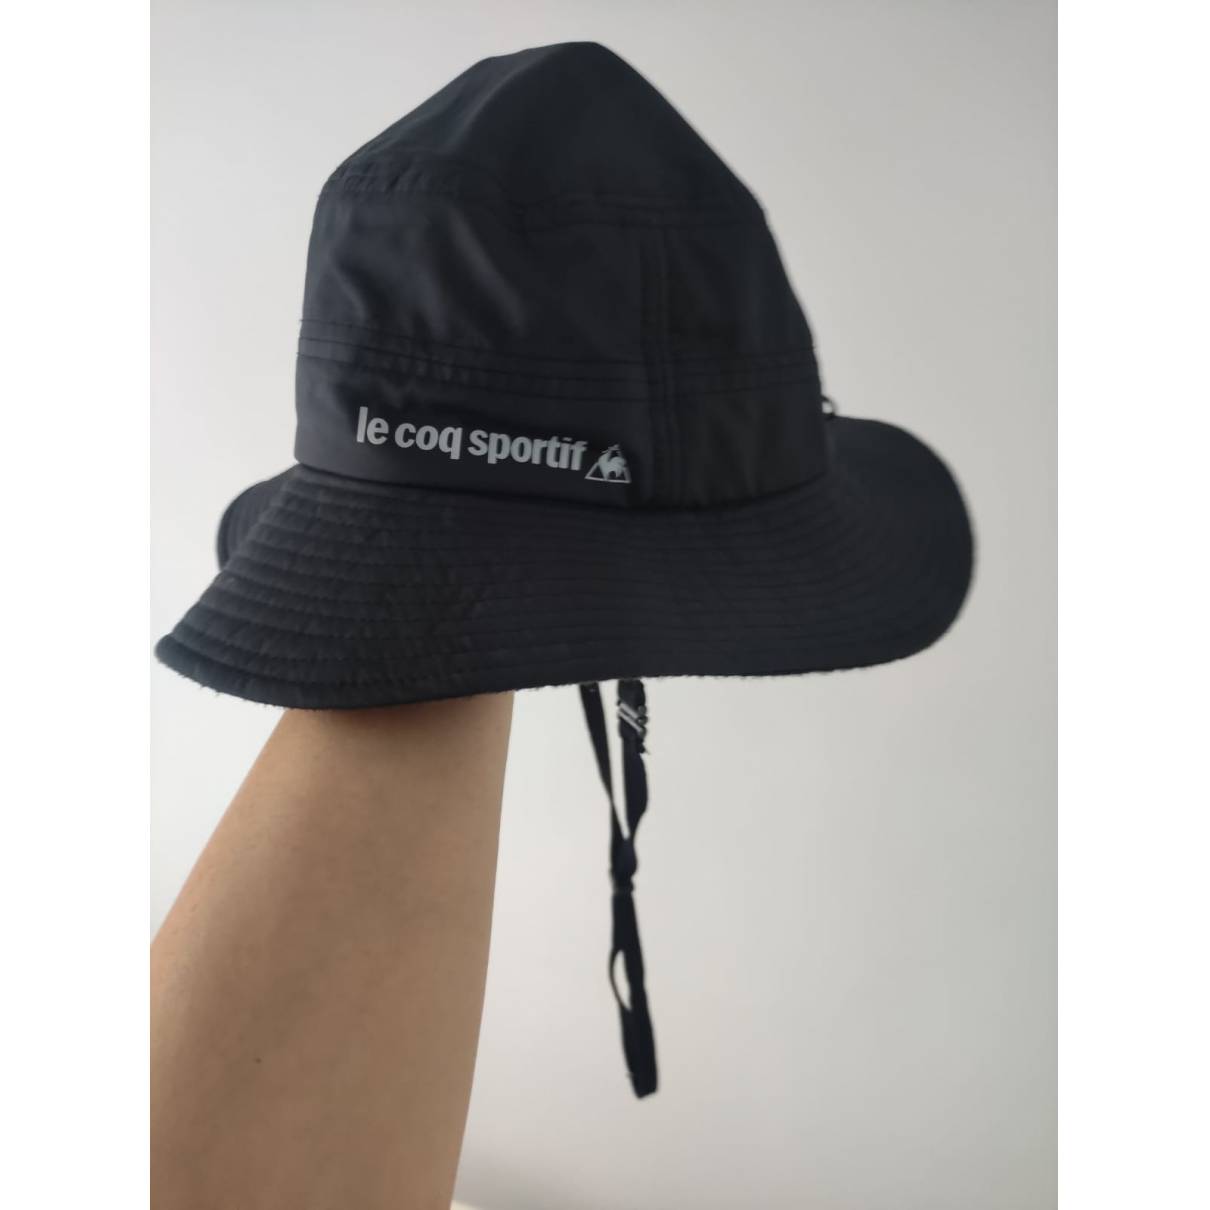 Buy LE COQ SPORTIF Hat online